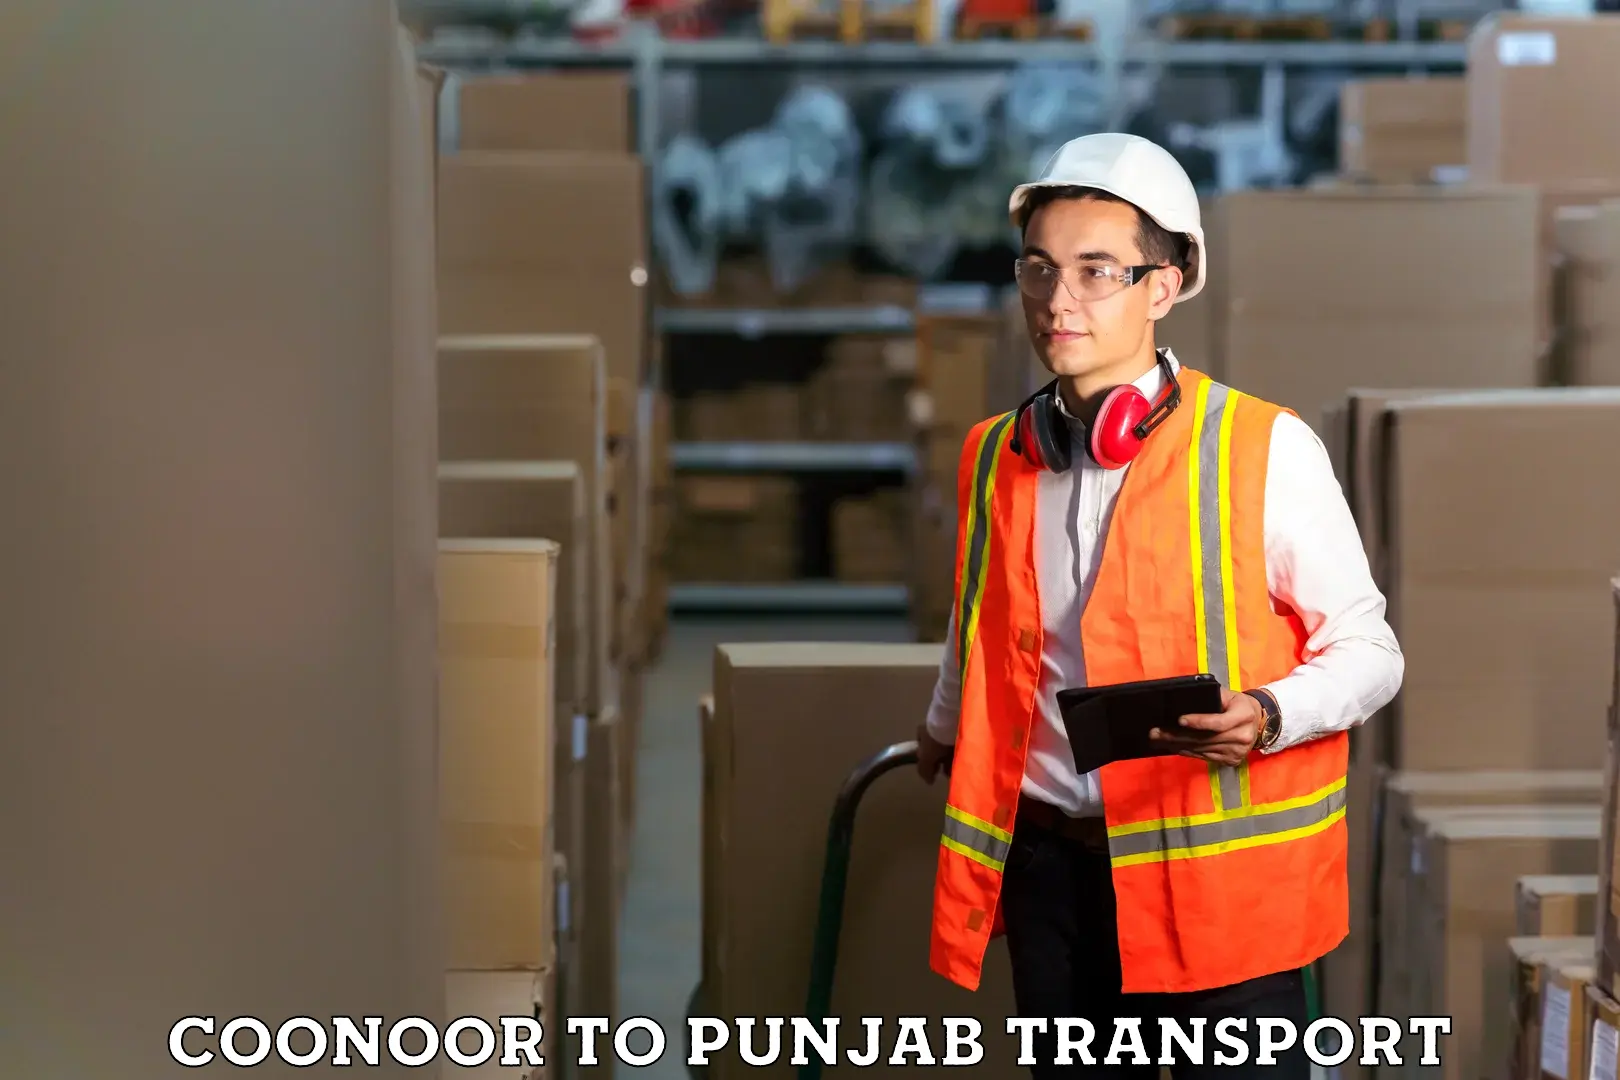 Cycle transportation service Coonoor to Punjab